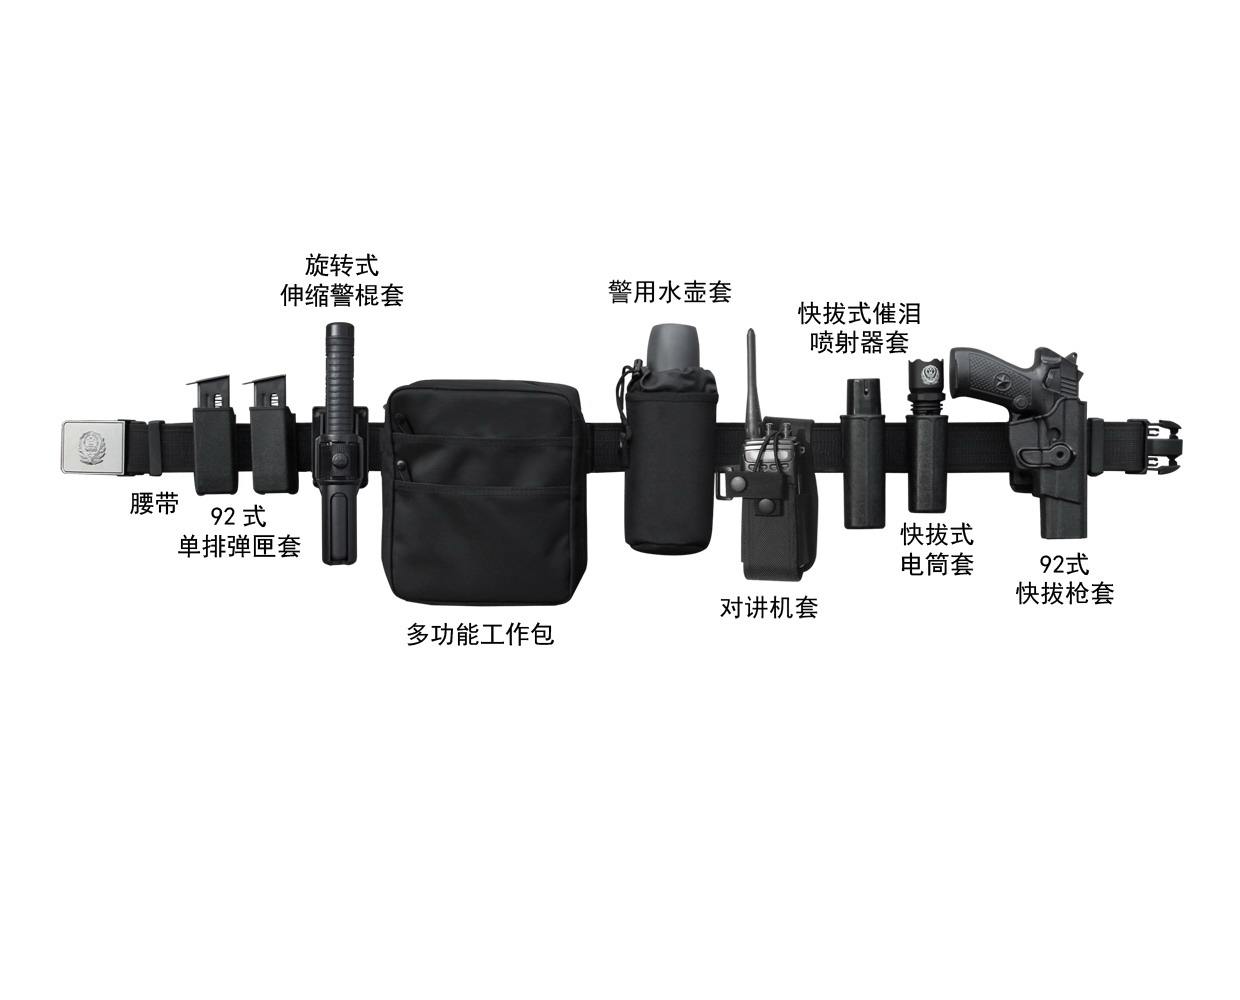 L9100A versatile modular belt components - nylon (Shanghai SWAT Use)